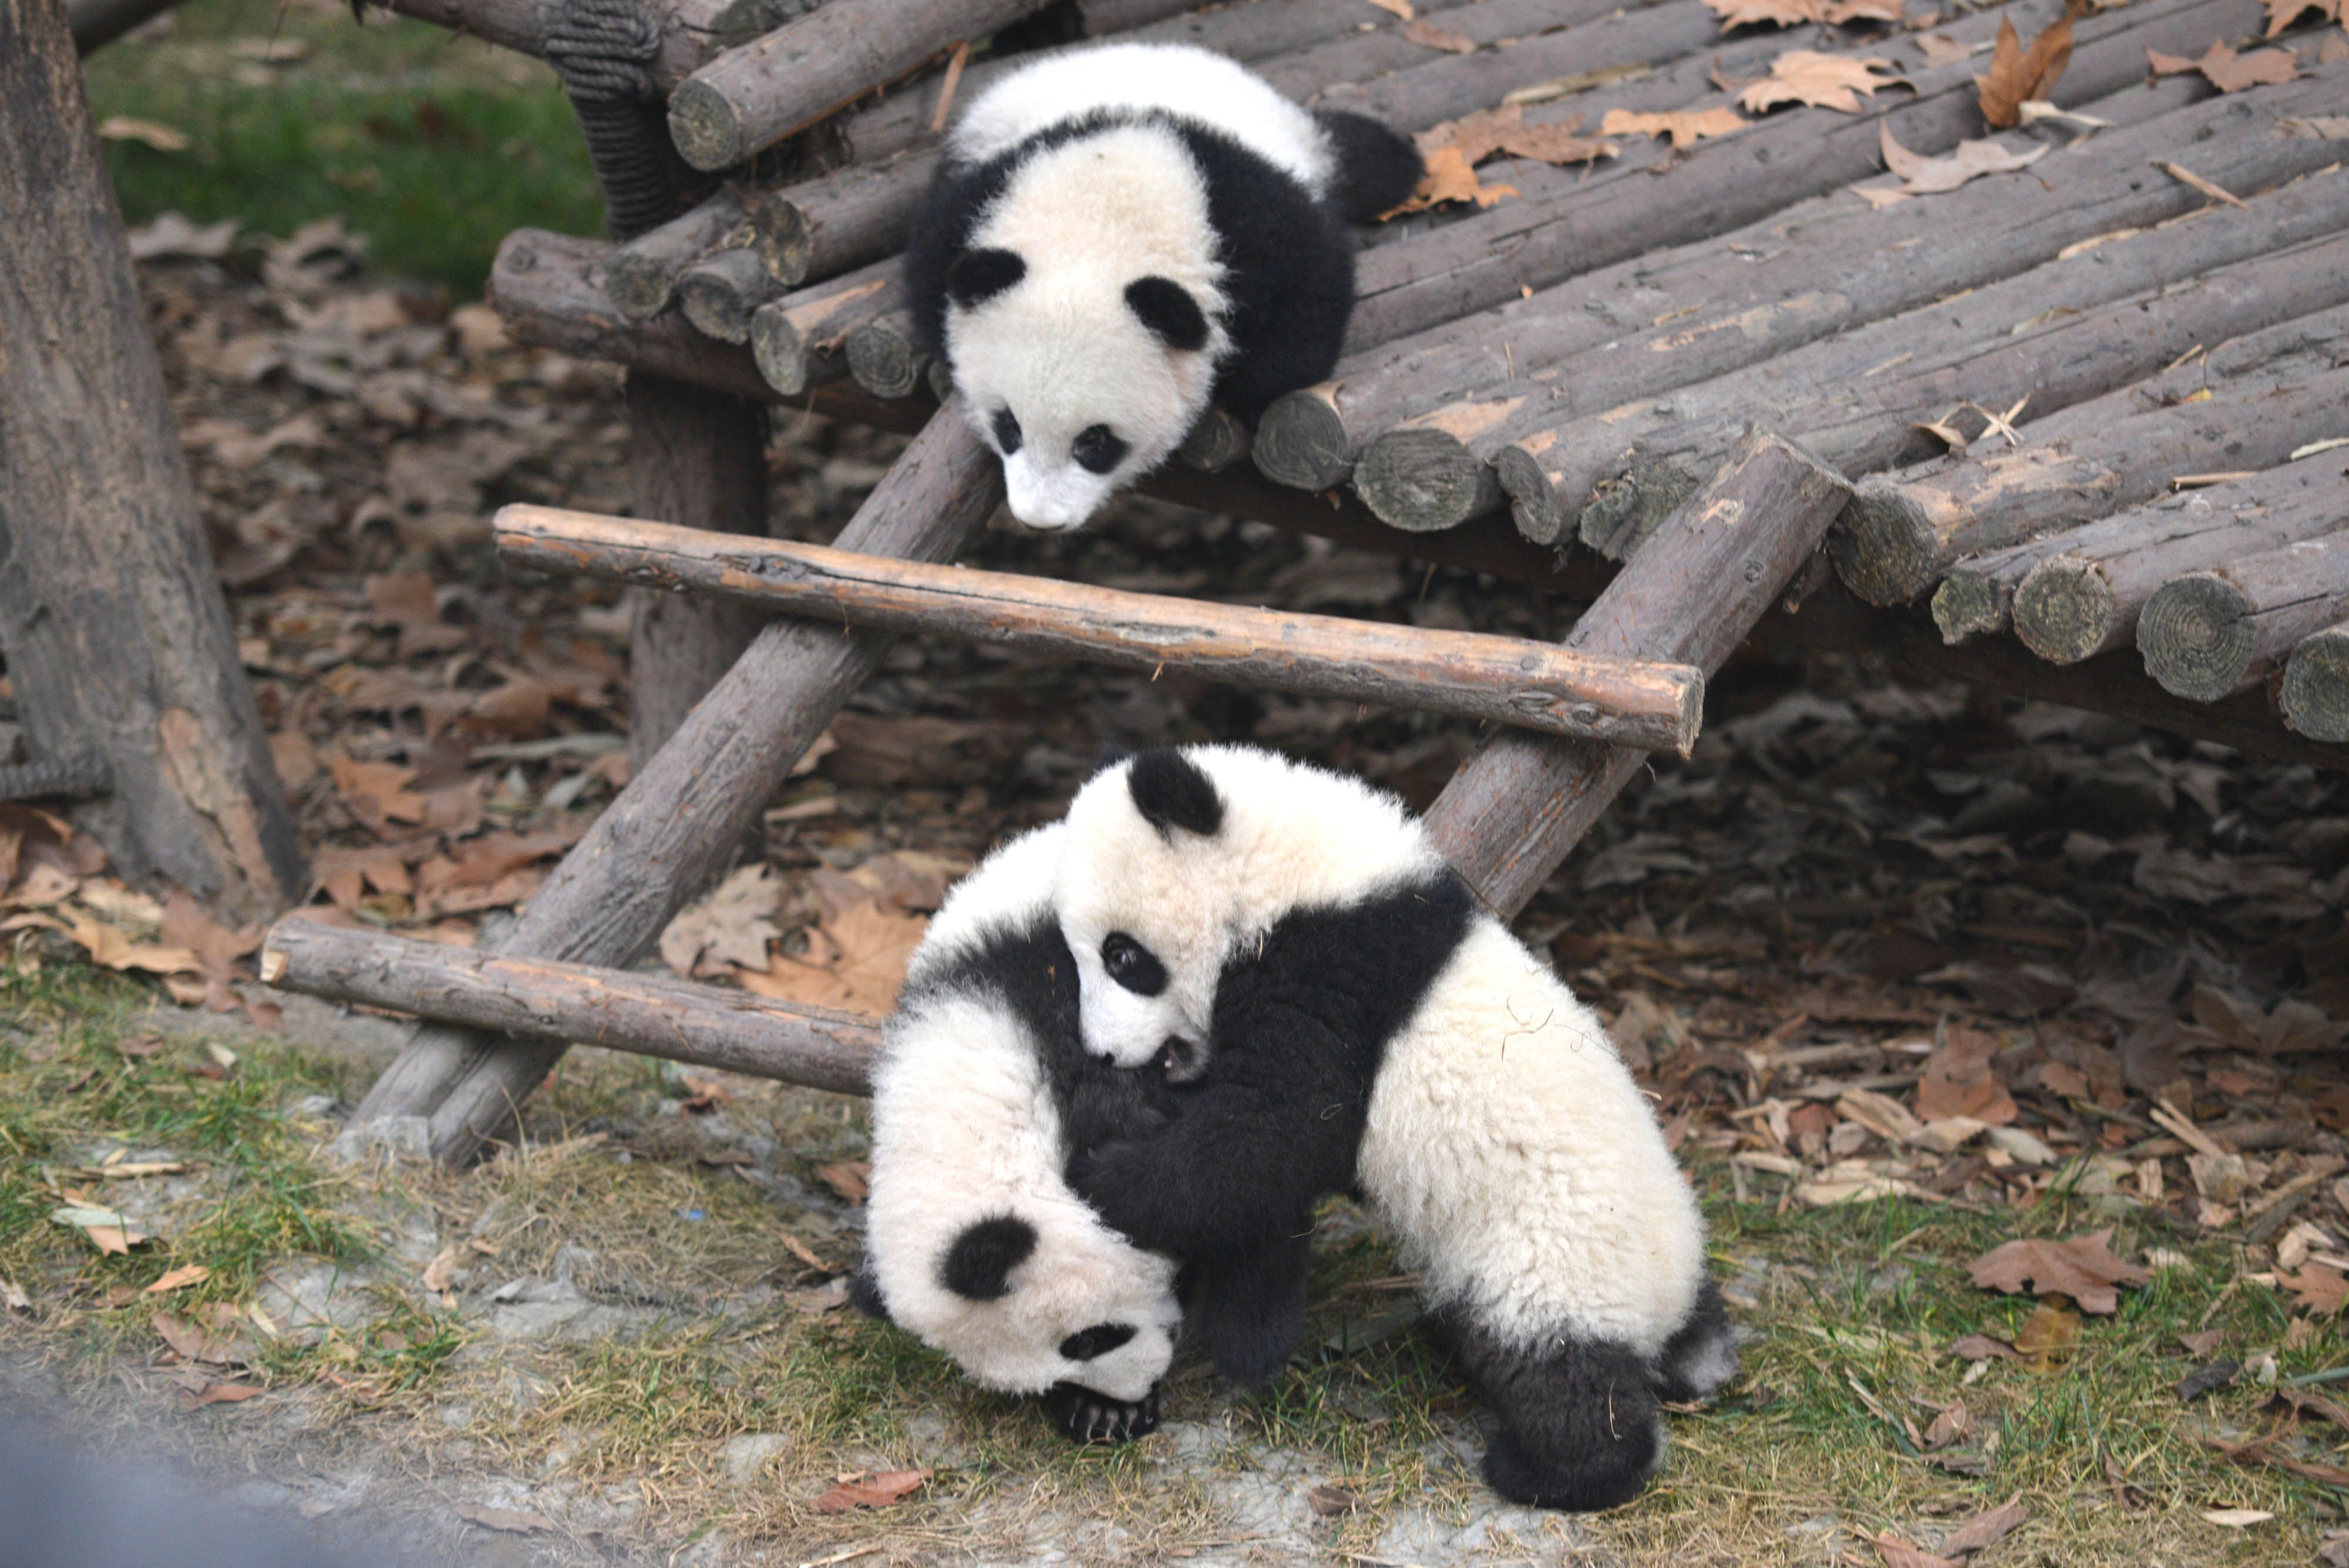 The Giant Panda Breeding Research Base in Chengdu